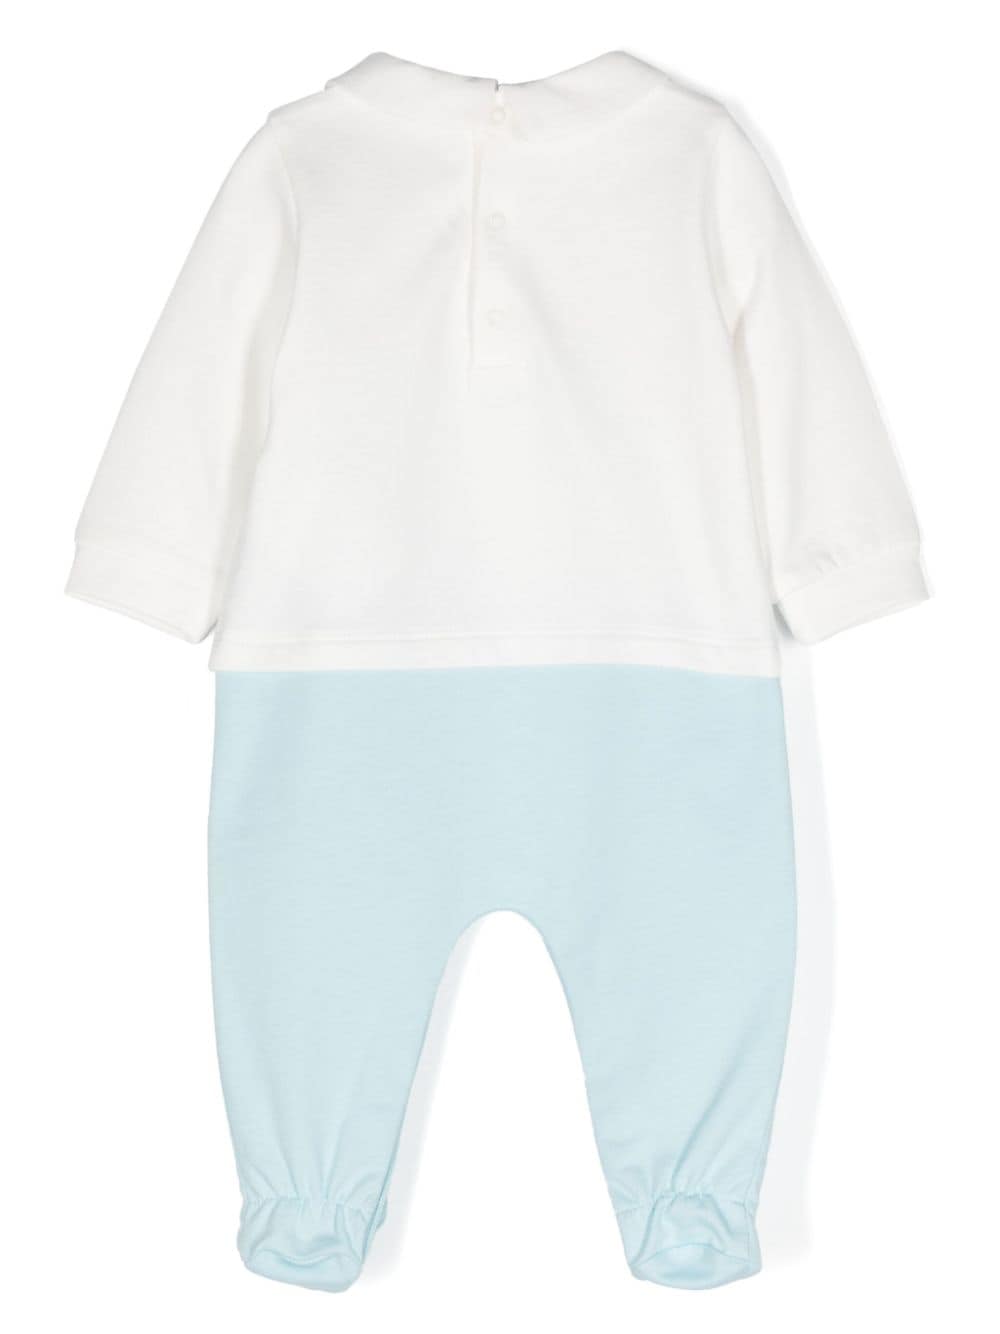 Baby blue and white cotton onesie